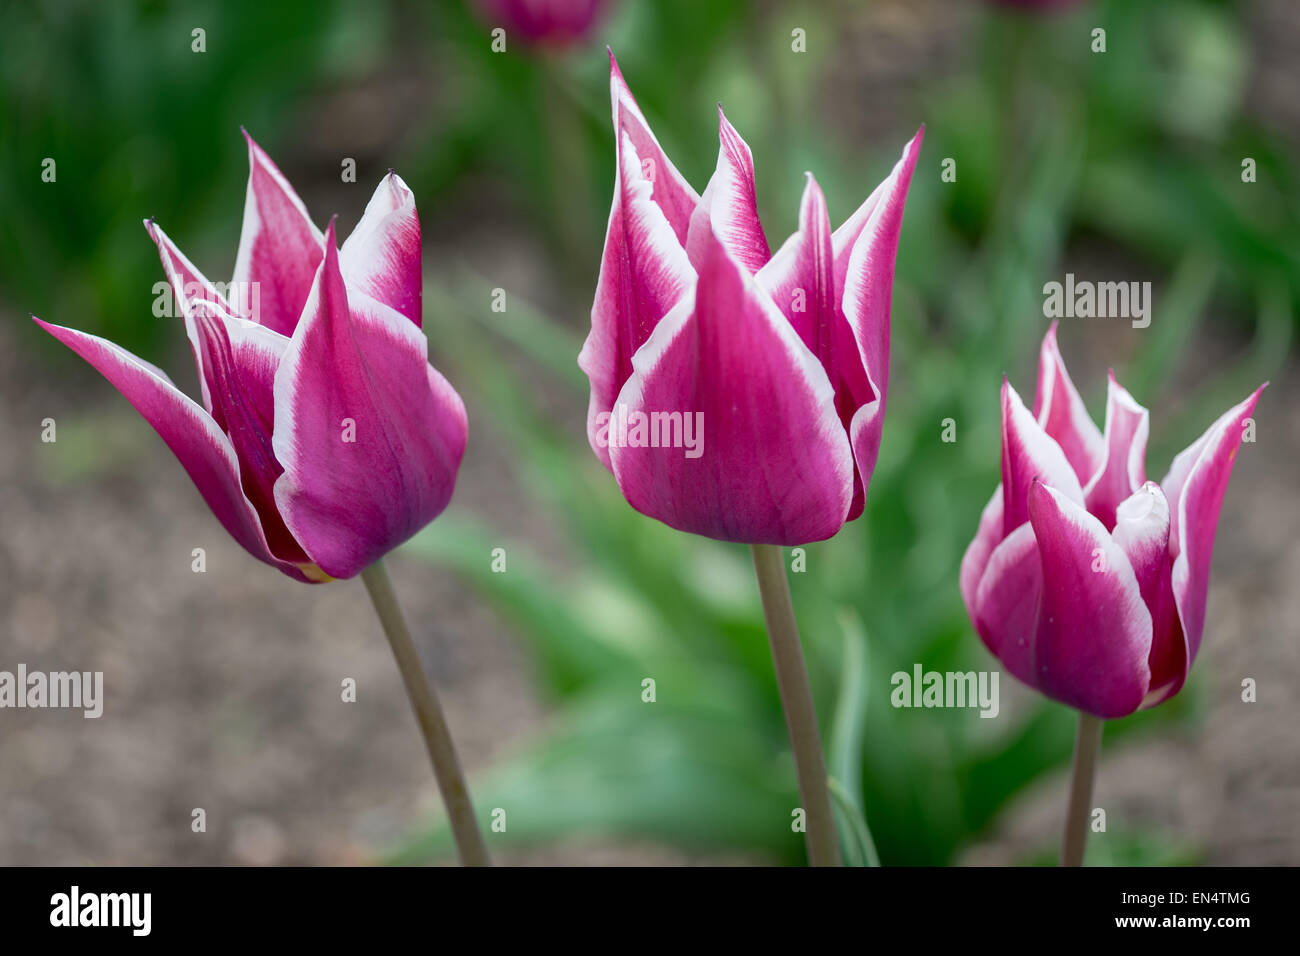 Three fancy purple tulips with white petal edges Stock Photo